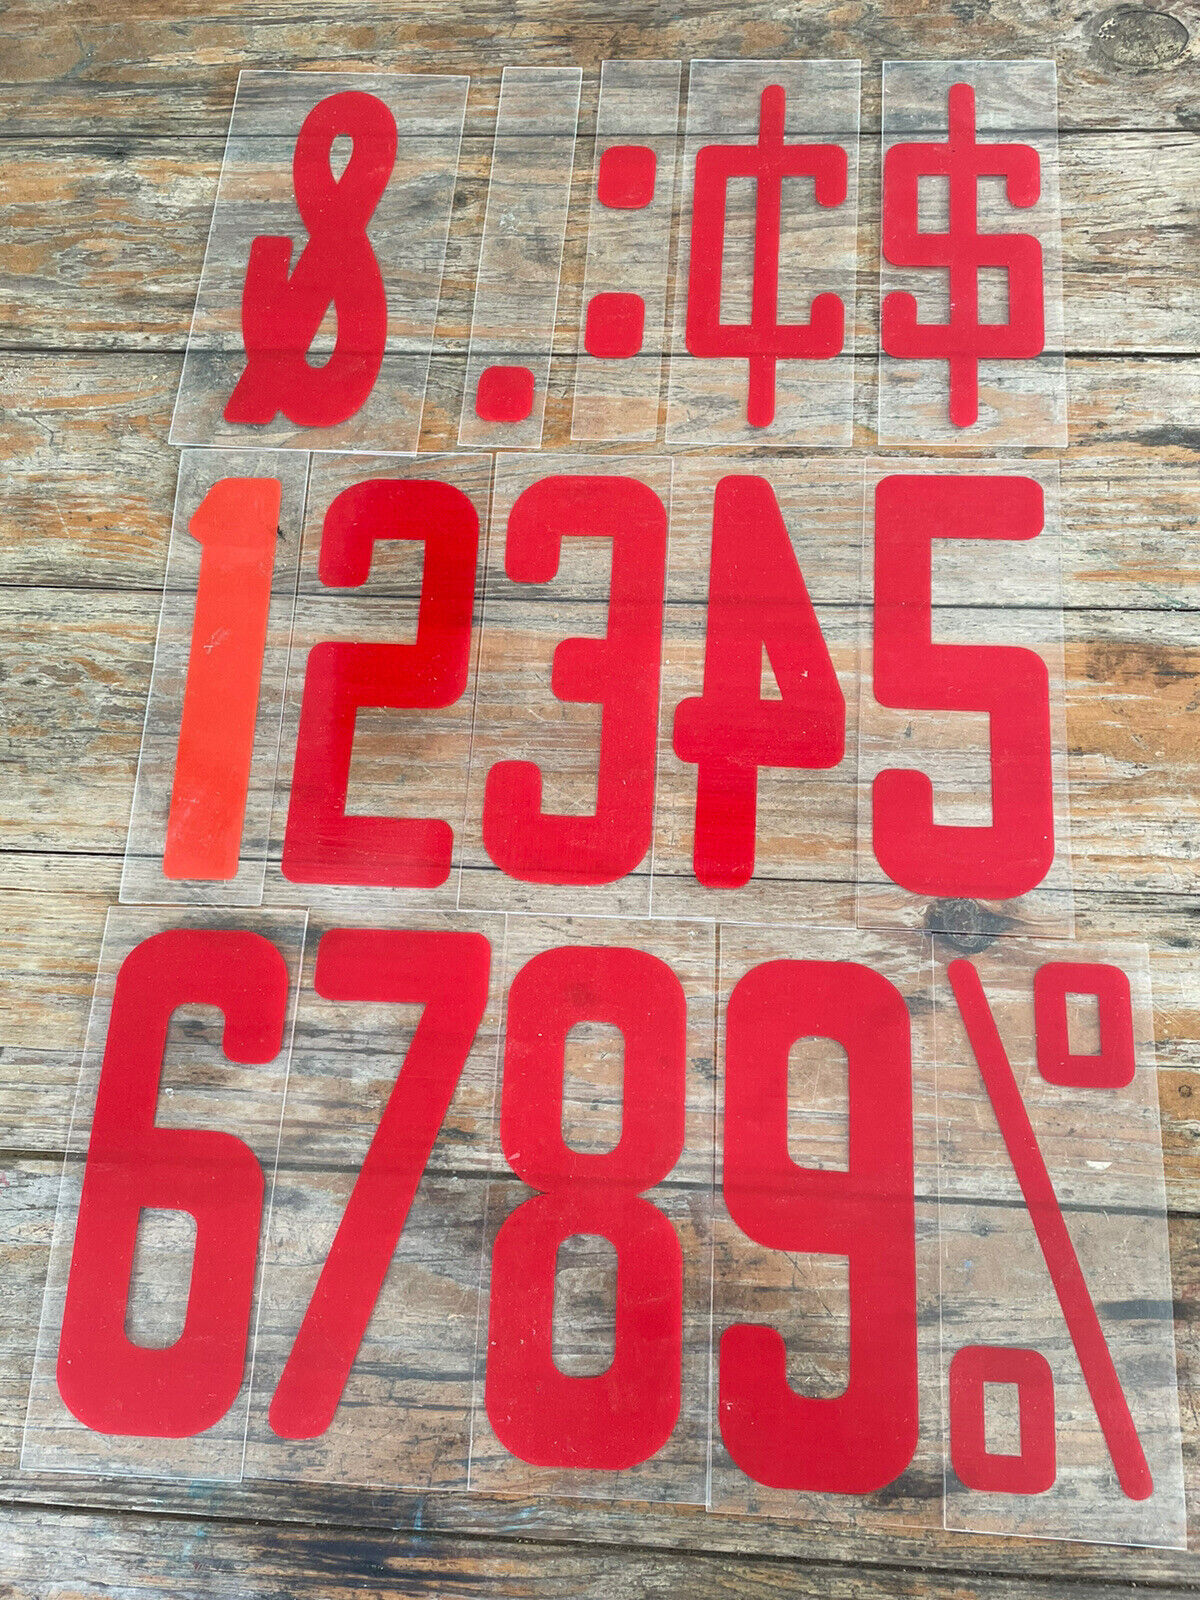 Vintage Retro Gas Station Plexiglass Numbers 1-9 & Symbols $&% ~ 9 Inches Tall